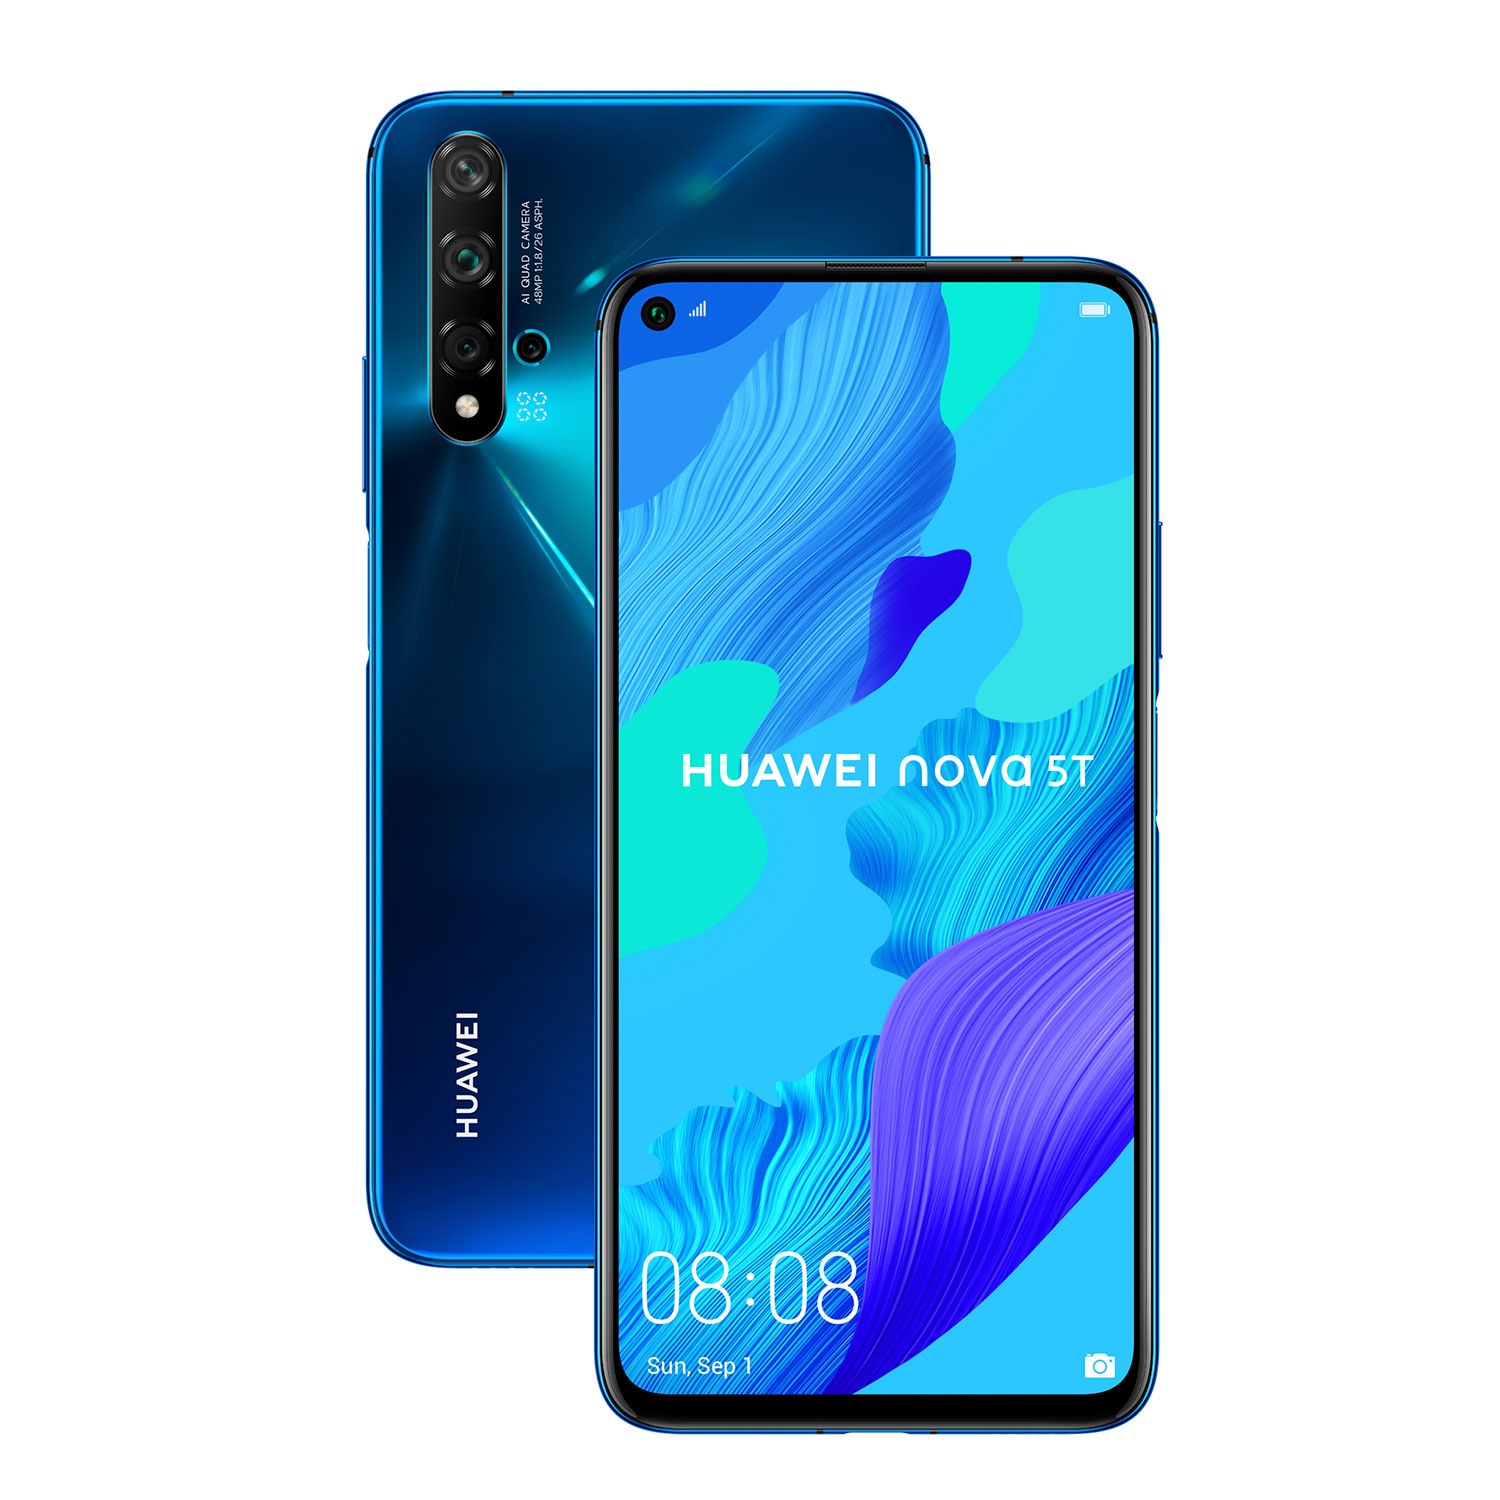 Huawei Smartphone »HUAWEI nova 5T«, Blau, 16,81 cm/6,26 Zoll, 128 GB  Speicherplatz, 48 MP Kamera jetzt bestellen bei OTTO